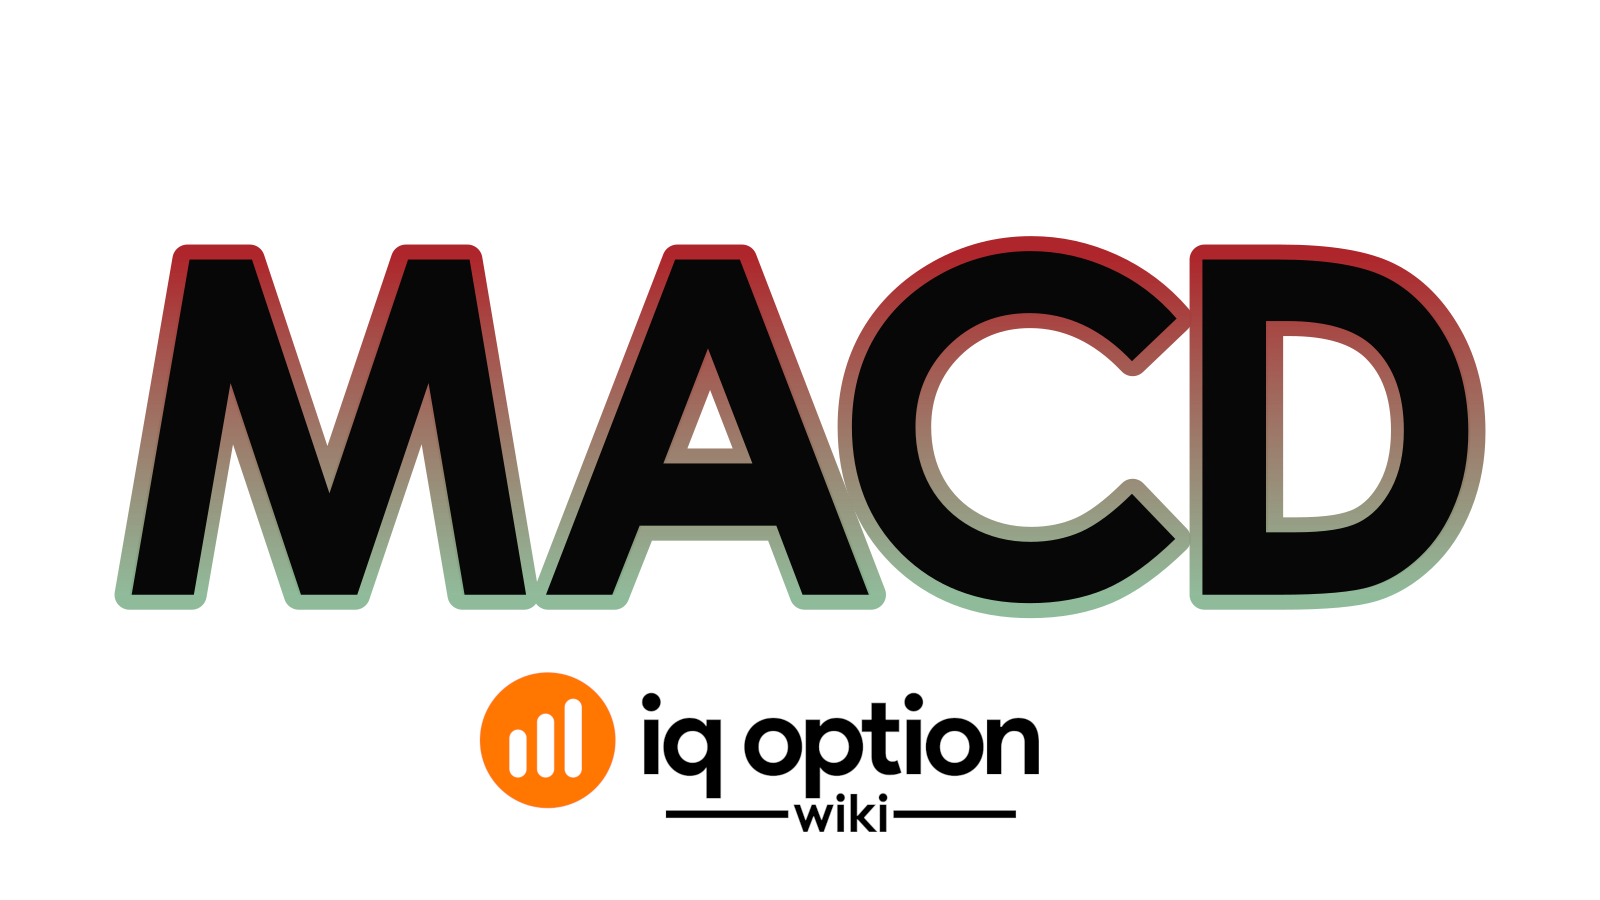 Best settings for MACD indicator